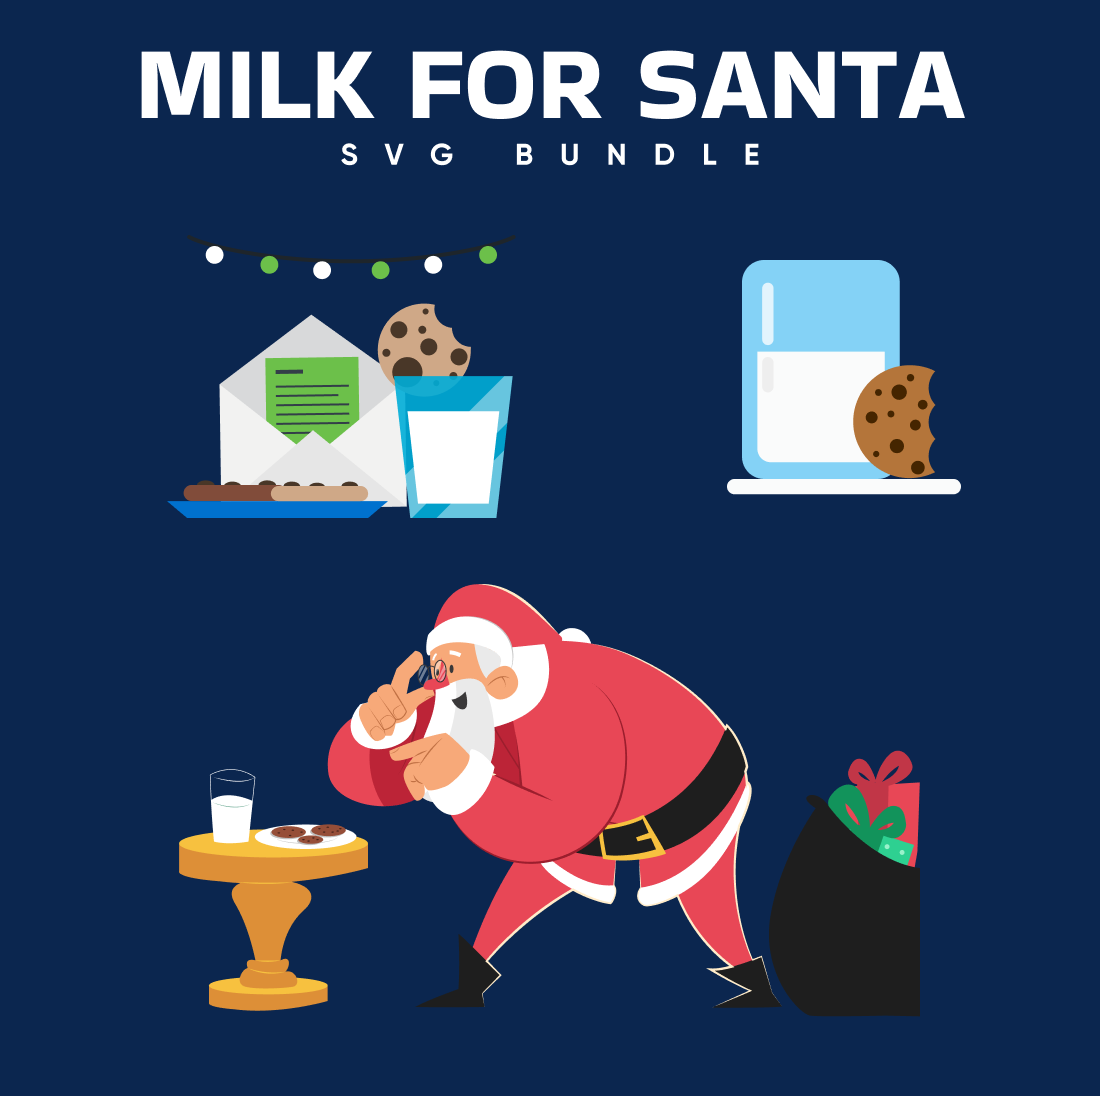 Milk for santa svg bundle preview.